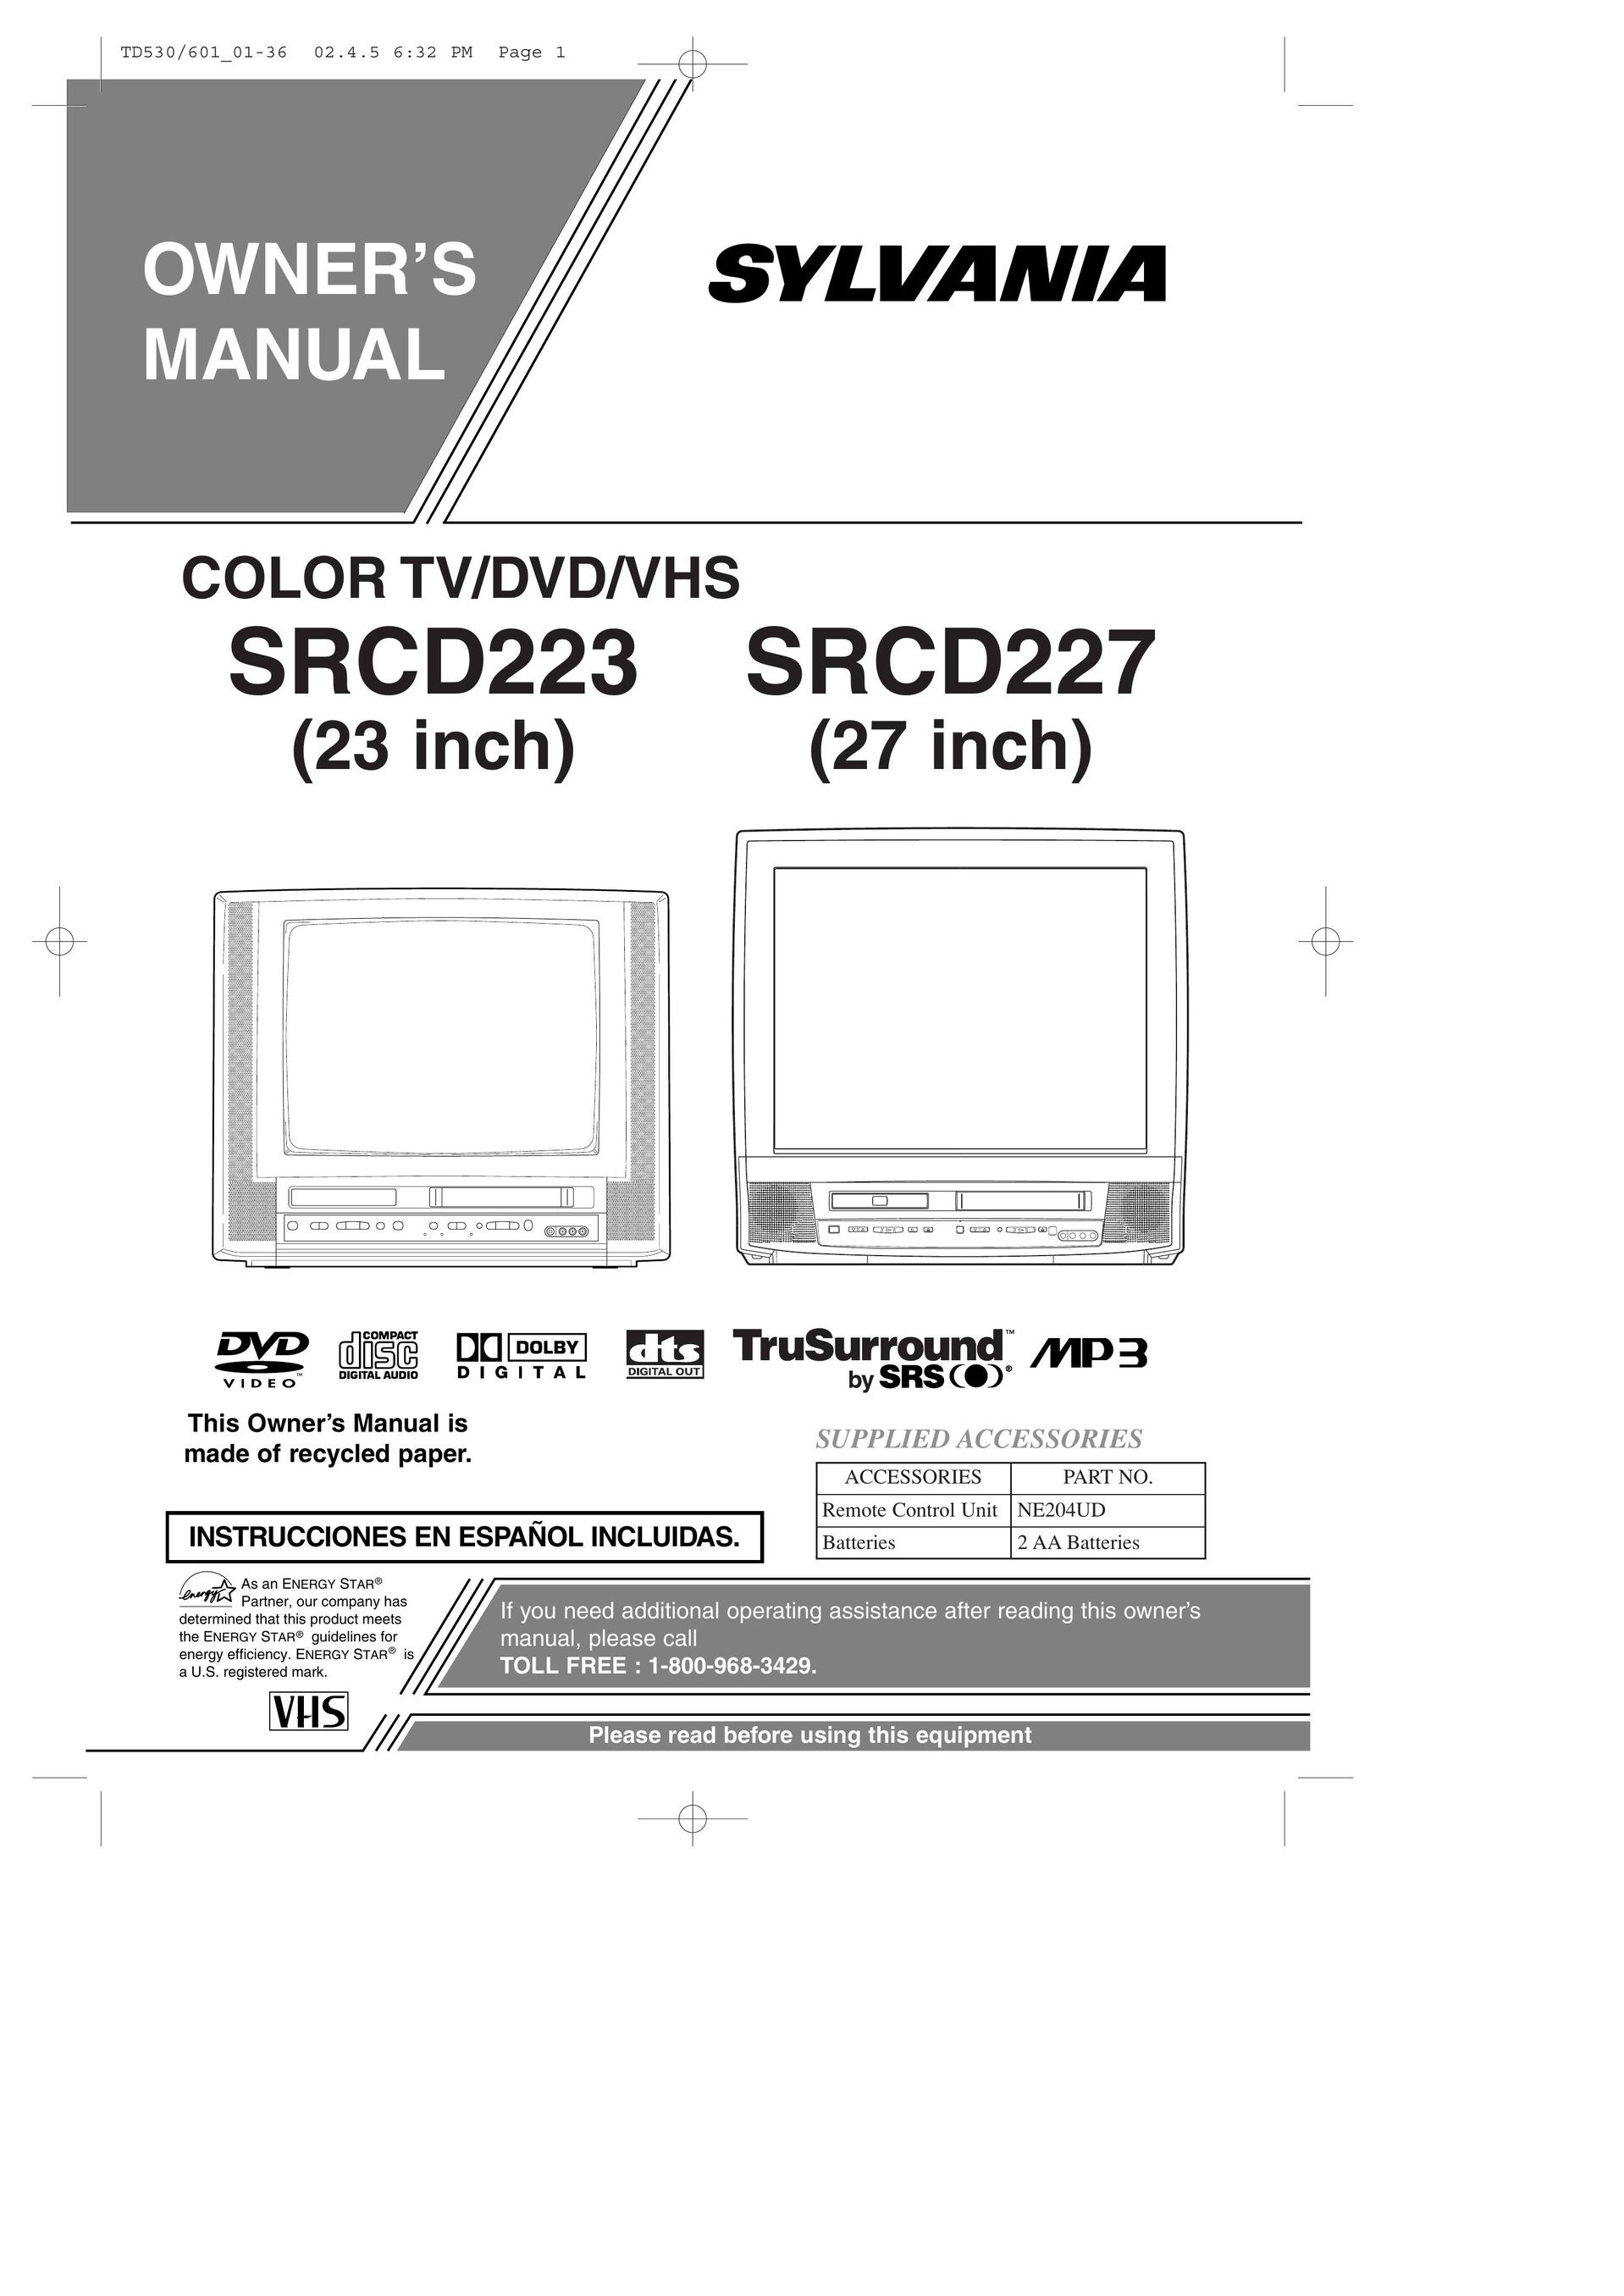 Sears SRCD227 TV DVD Combo User Manual